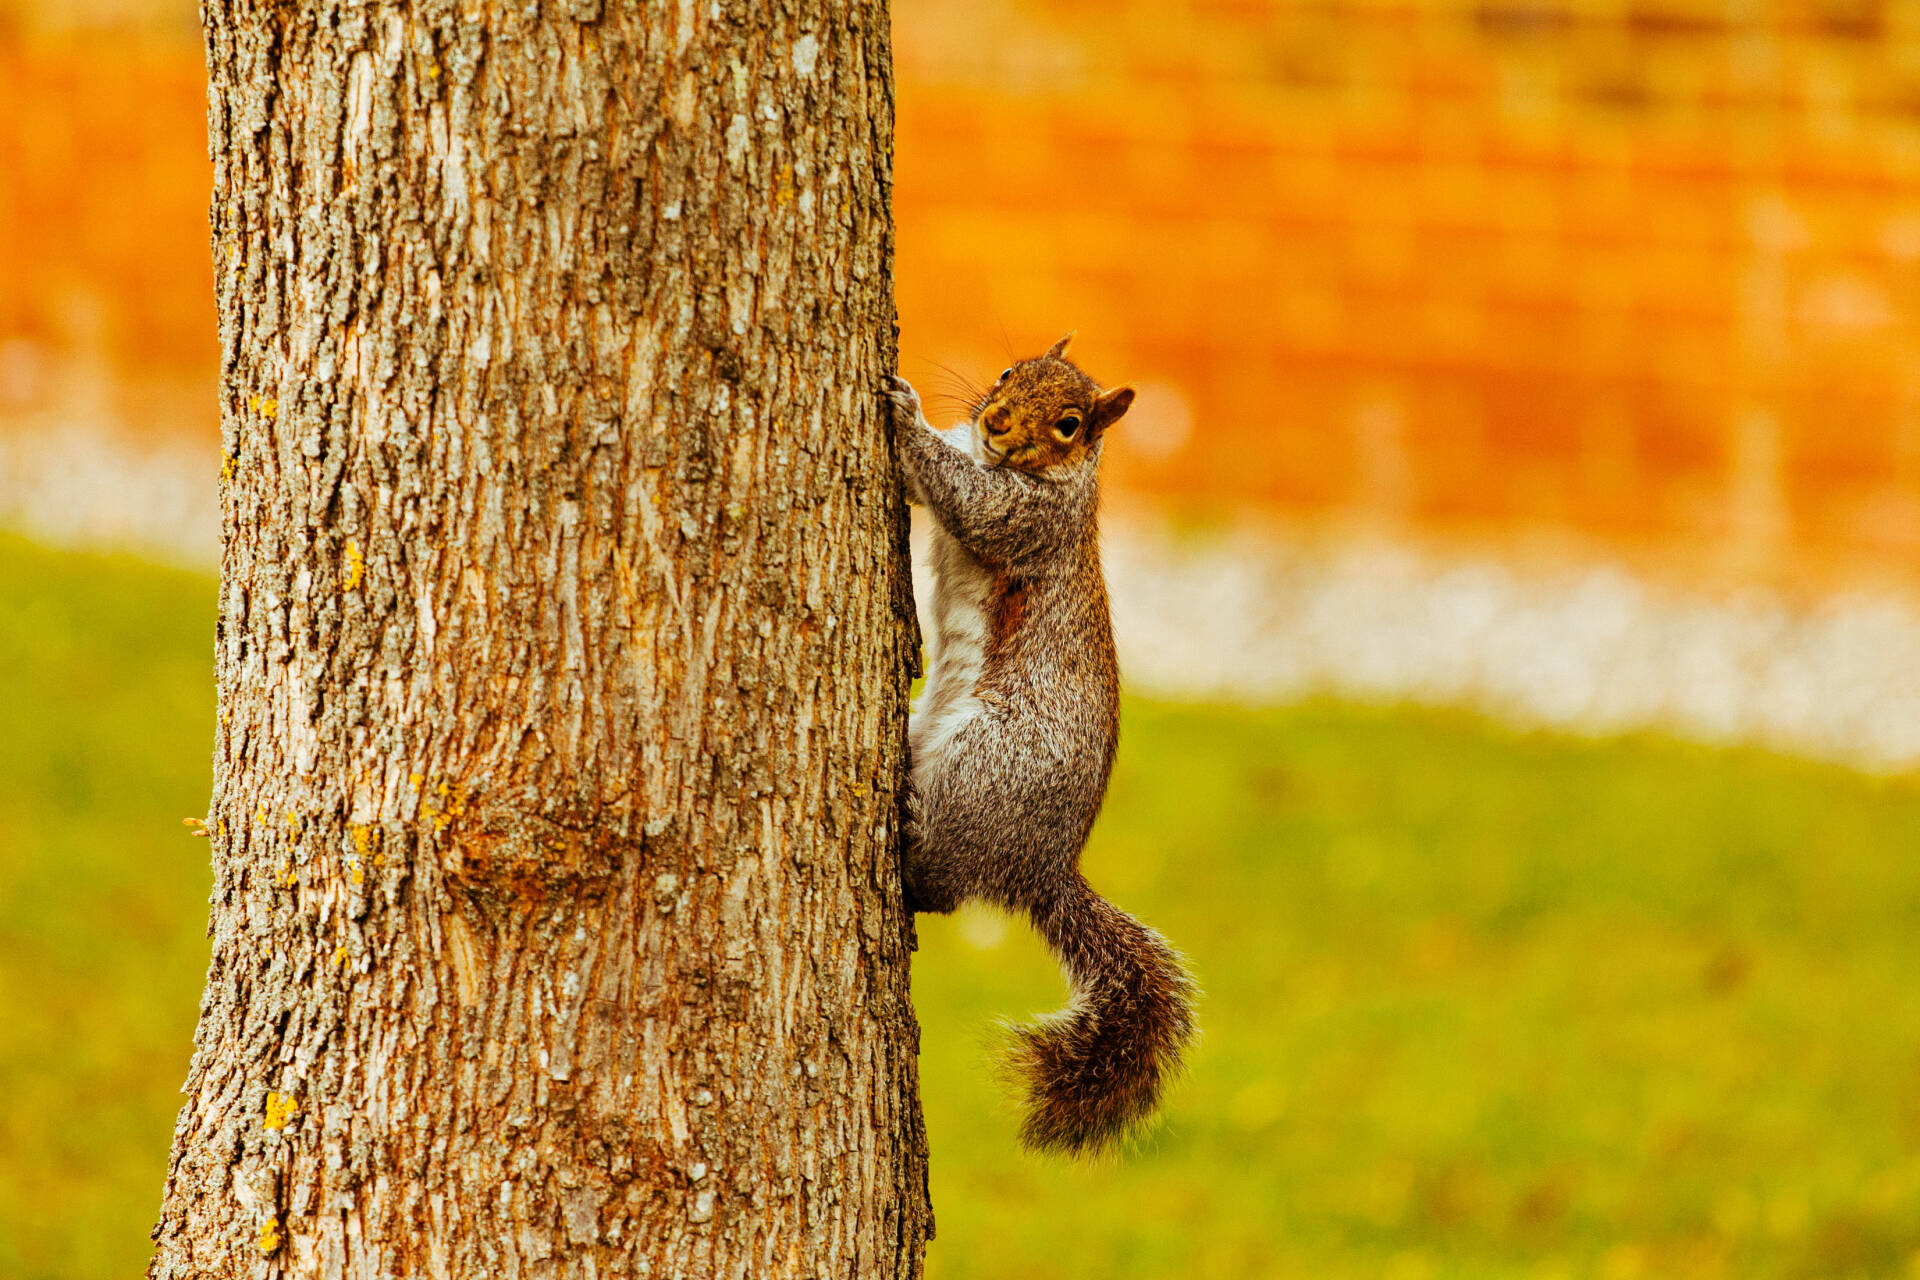 A Squirrel climbing a tree.